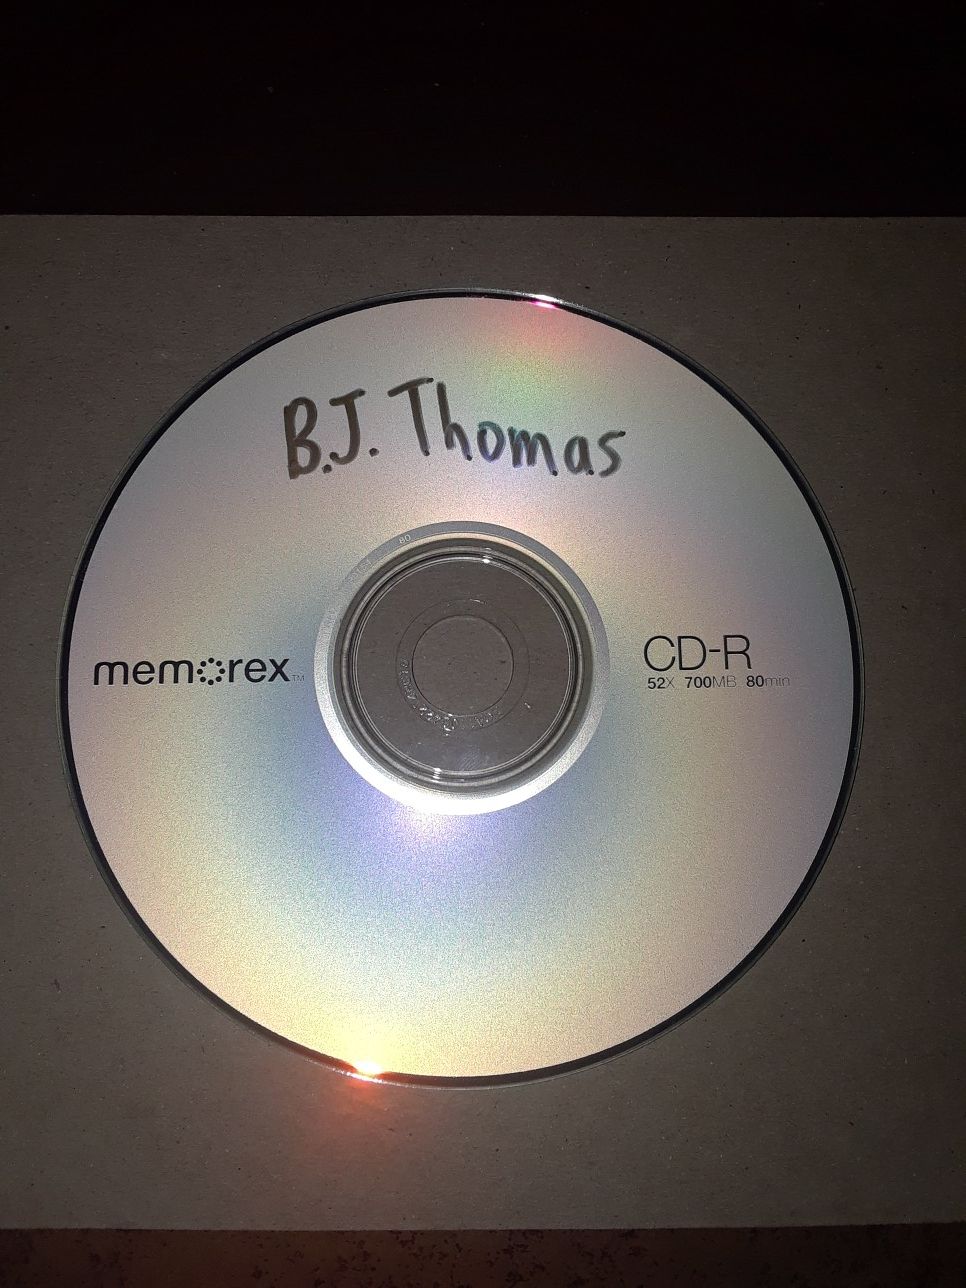 CD Album Music #1 and 2 - B.J. Thomas and Israel Kamakawiwo'ole